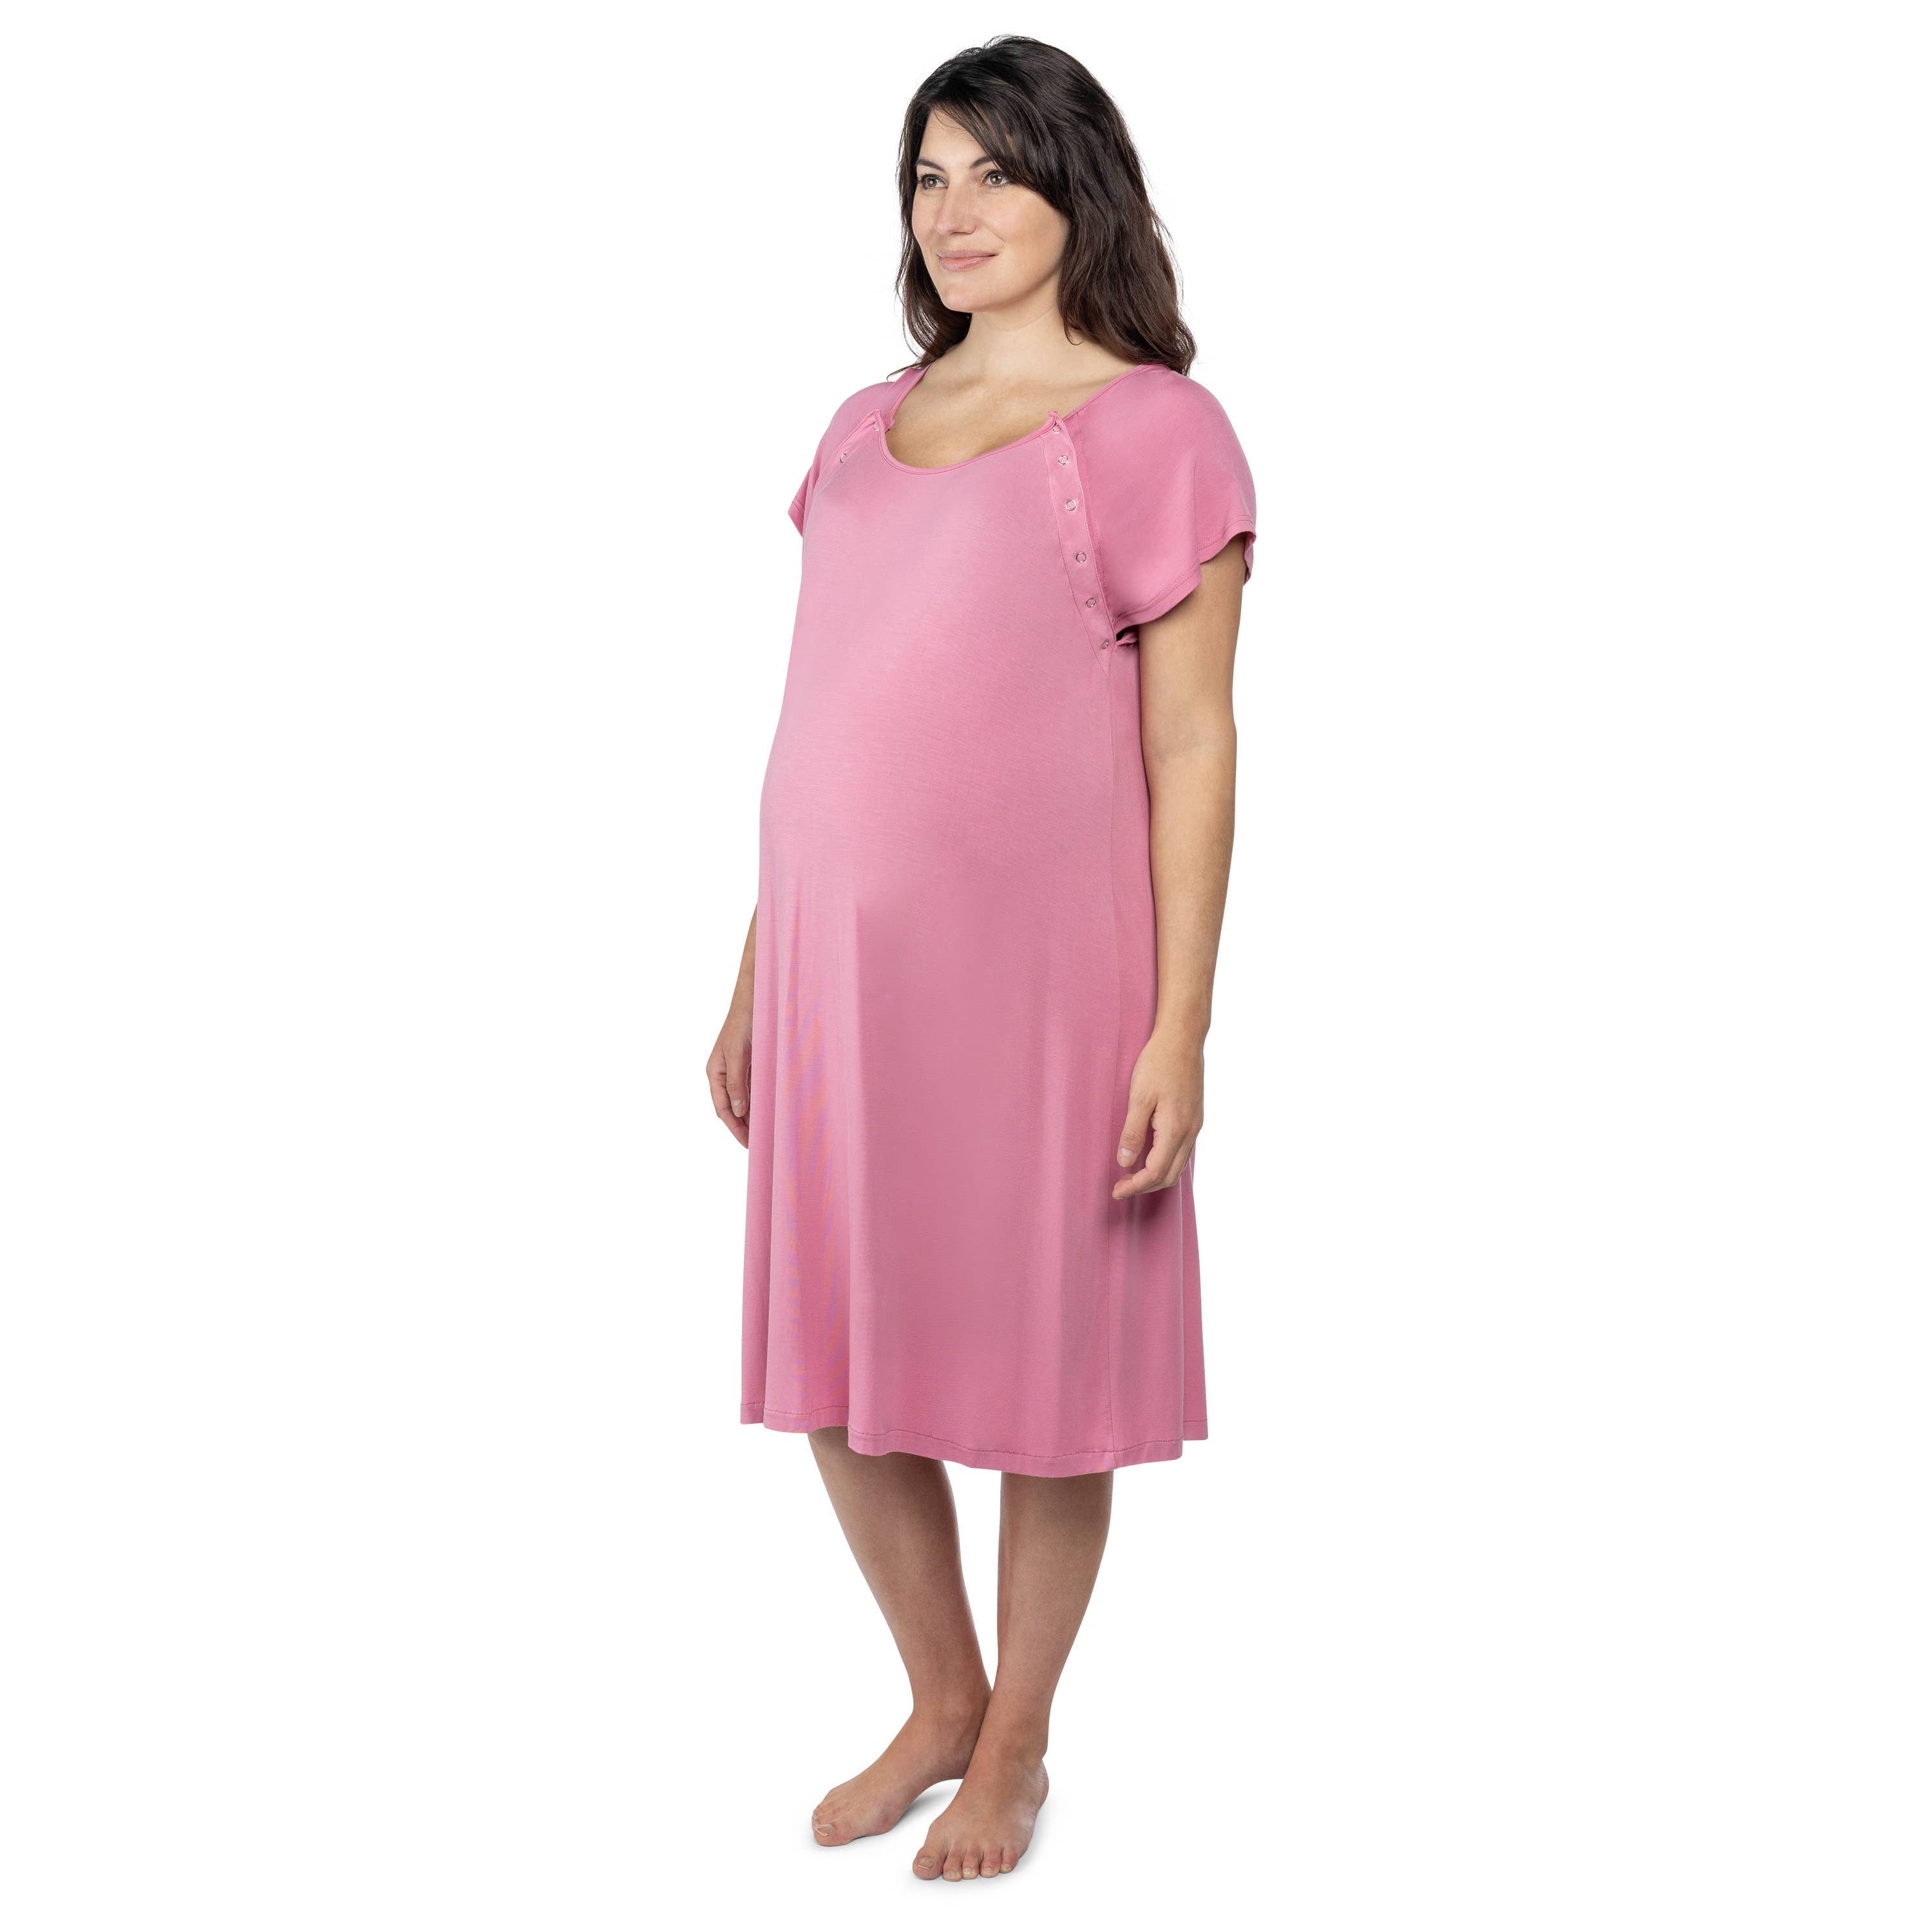 Eleanora Bamboo Maternity & Nursing Dress | Navy Heather - Kindred Bravely